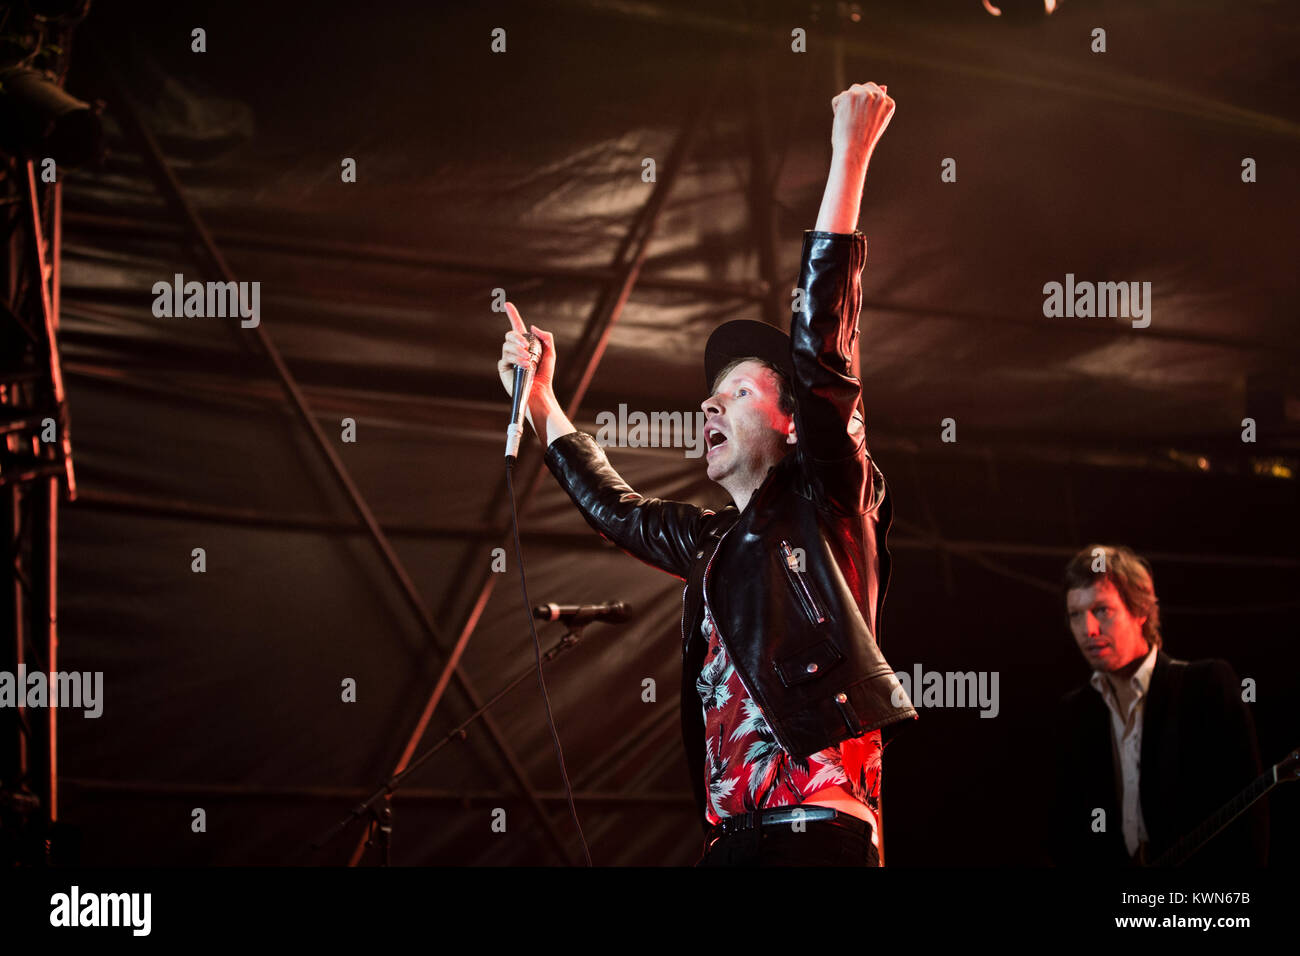 The American singer, songwriter and multi-instrumentalist Beck performs a live concert at the Danish music festival SmukFest / Skanderborg Festival 2015. Denmark, 08/08 2015. Stock Photo